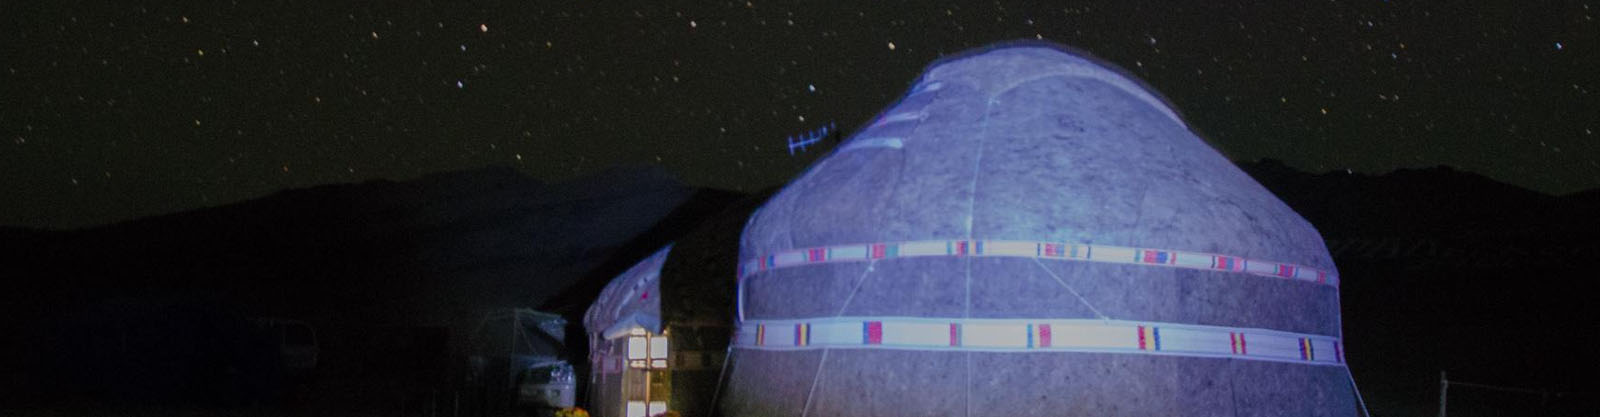 uzbekistan-astronomical-tour-banner